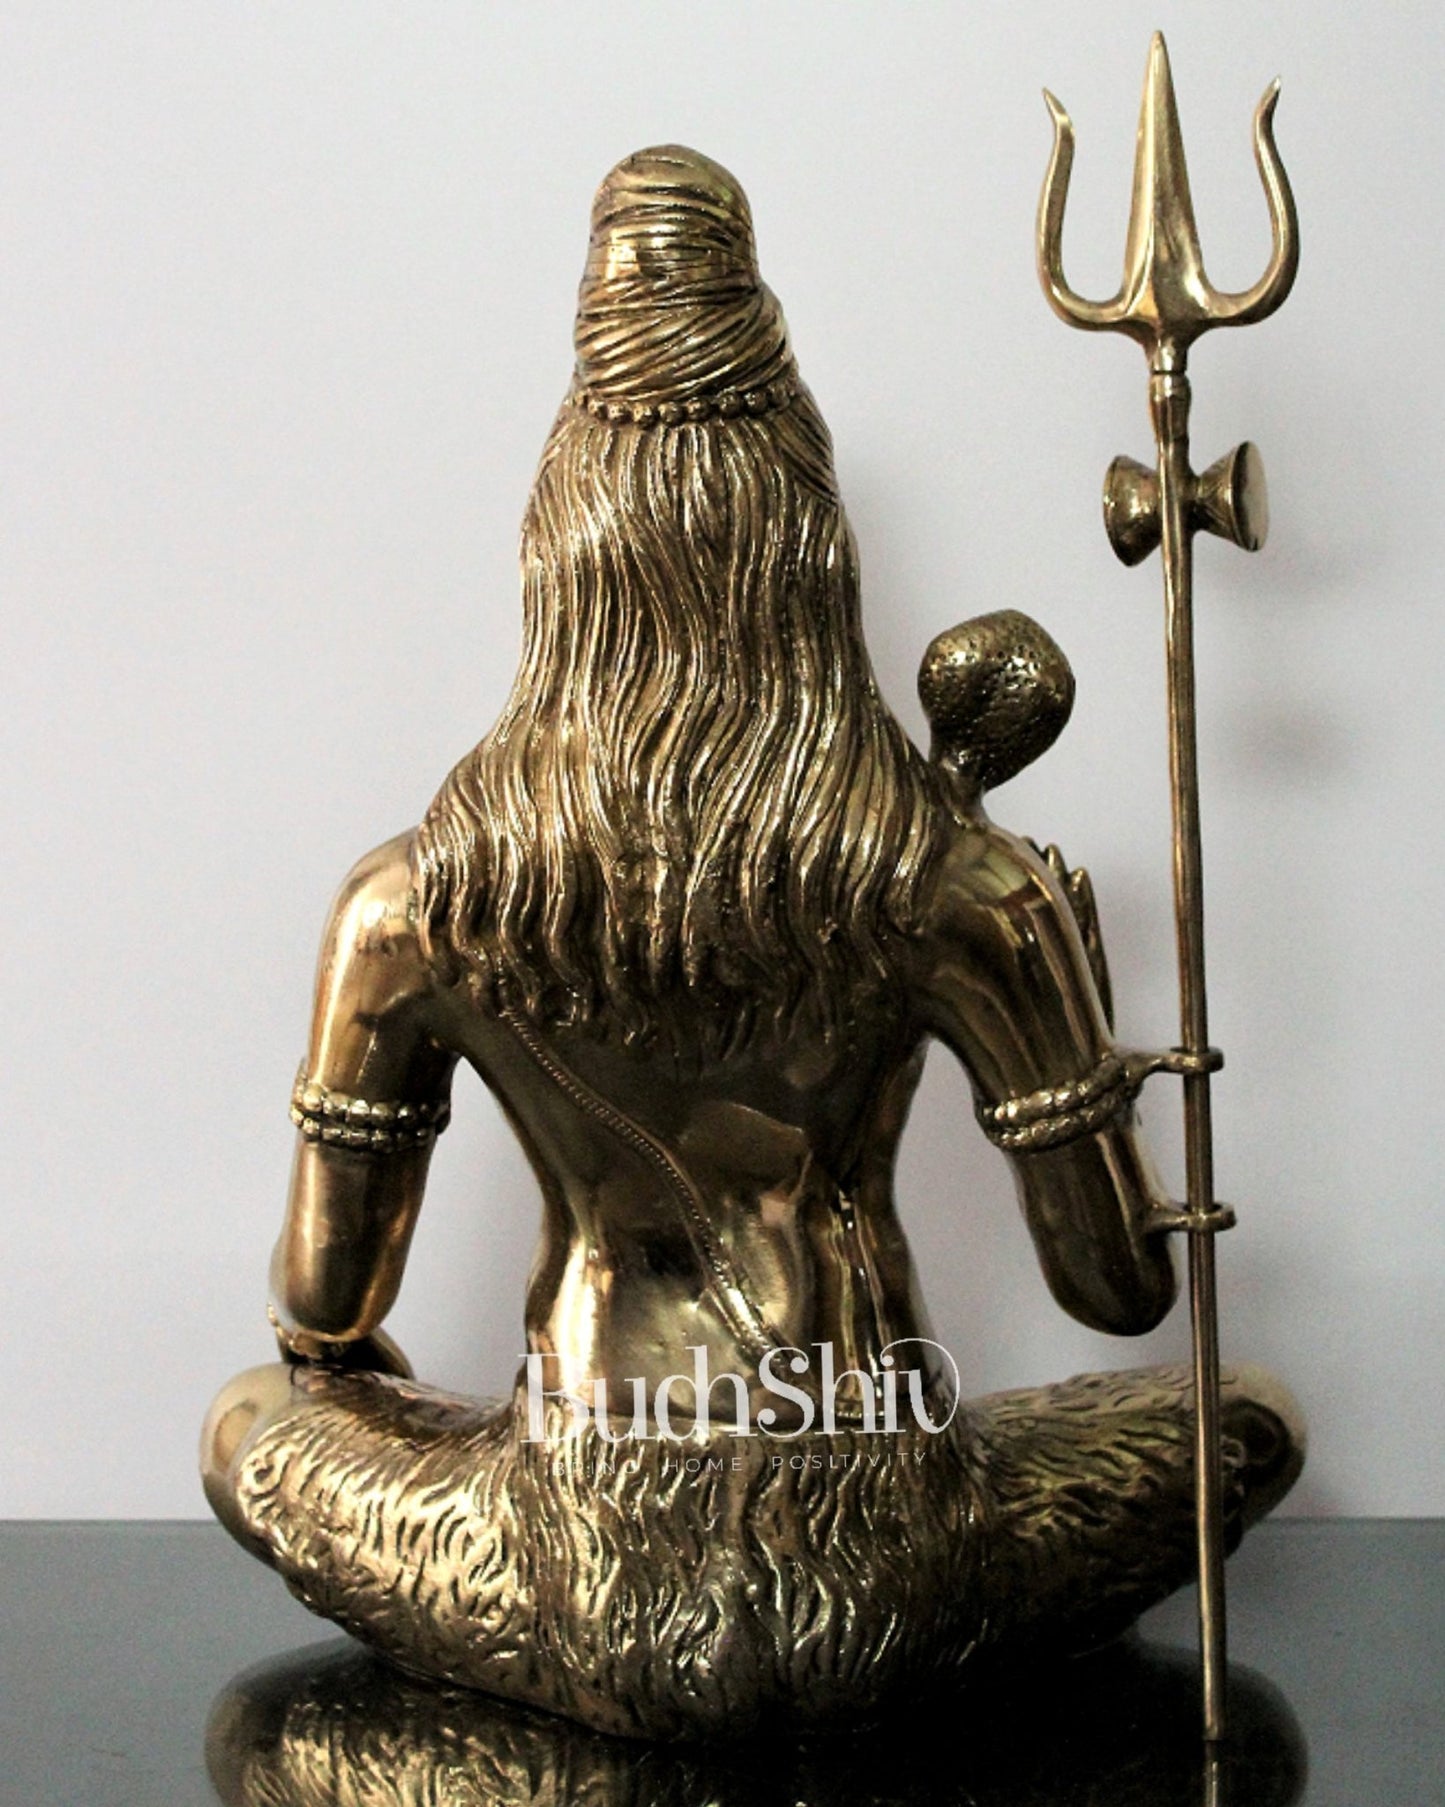 Lord Shiva Brass Idol 20 inches polished brass - Budhshiv.com